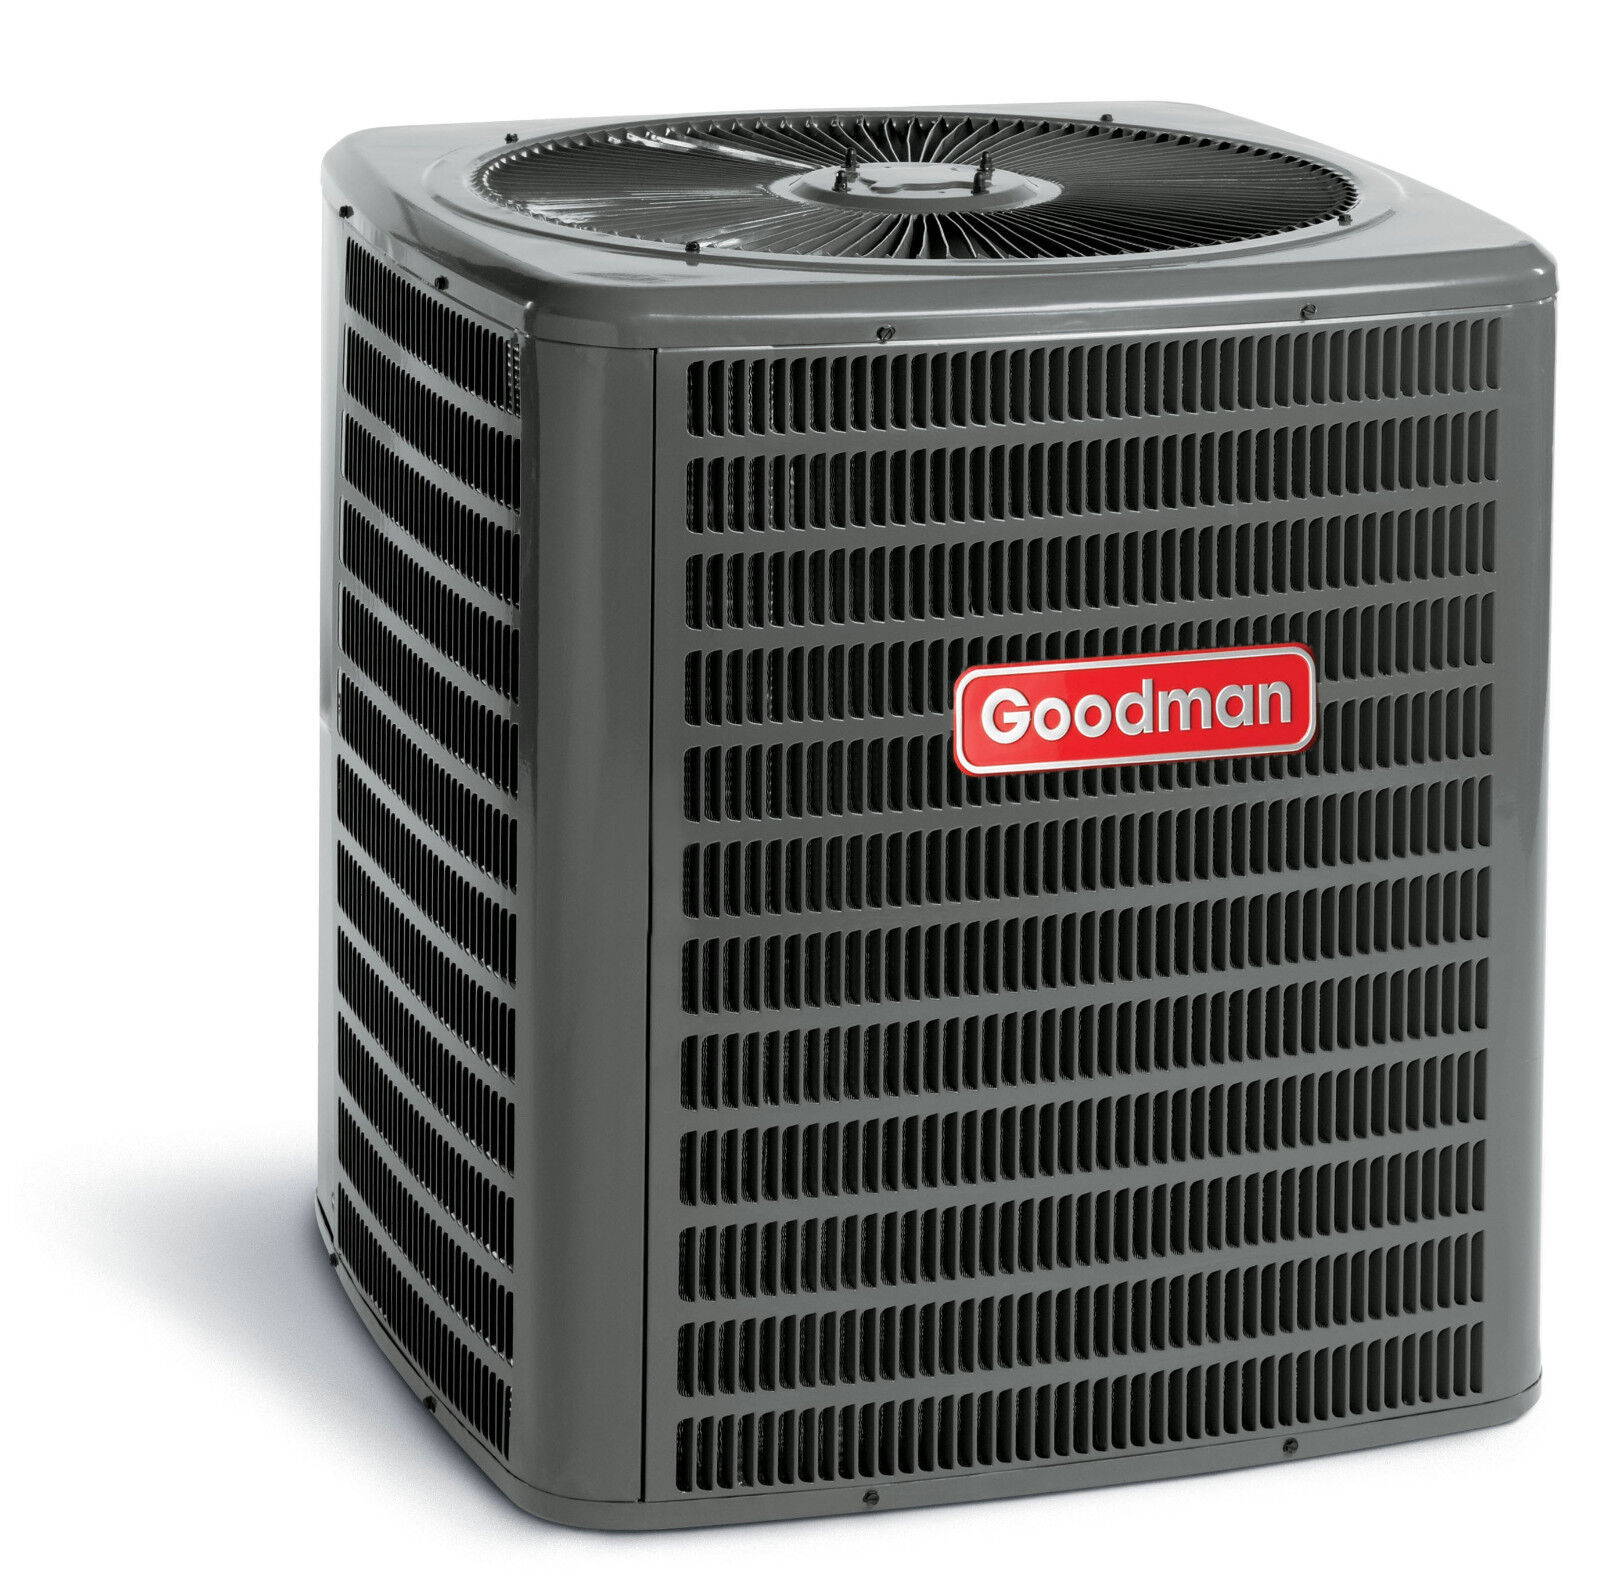 Goodman split central air conditioner unit